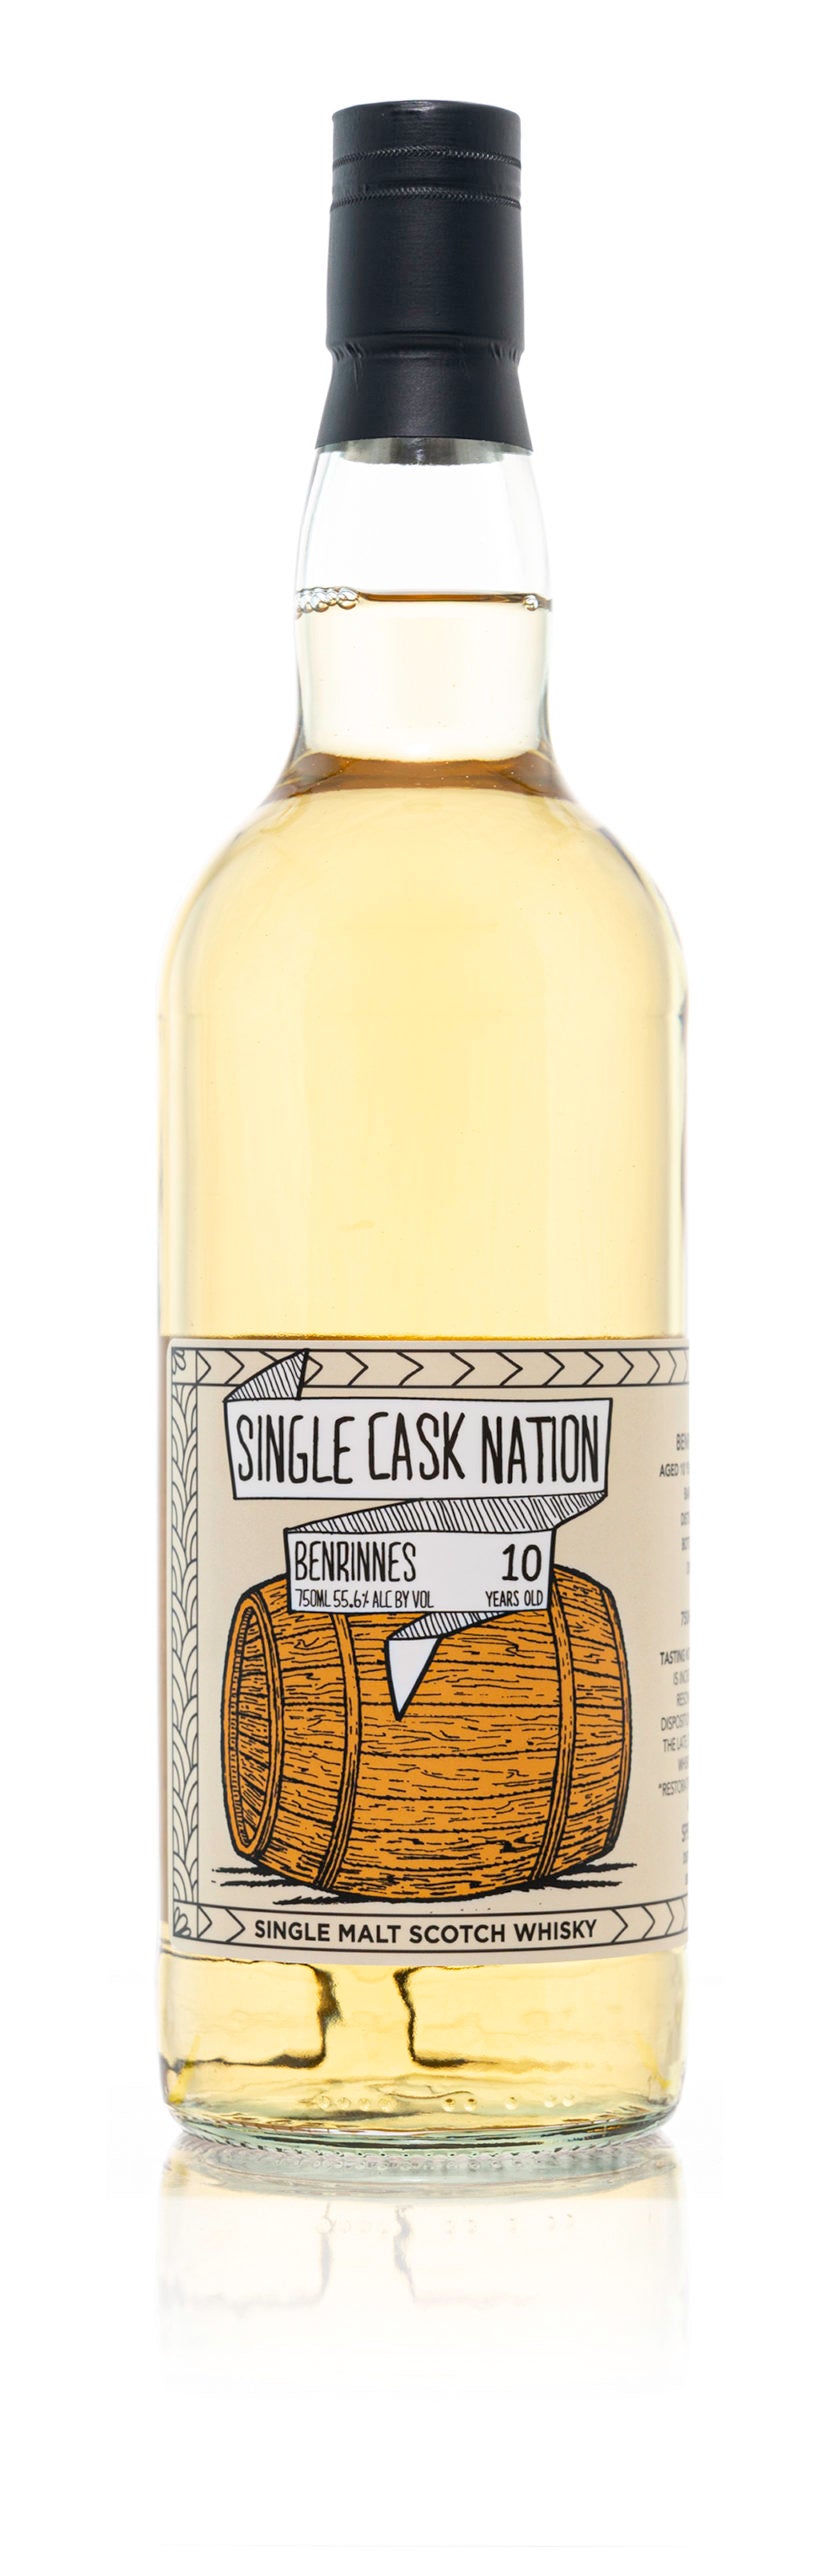 Single Cask Nation Benrinnes Speyside Single Malt Scotch Whisky 10 Years Old (2011) 750ml